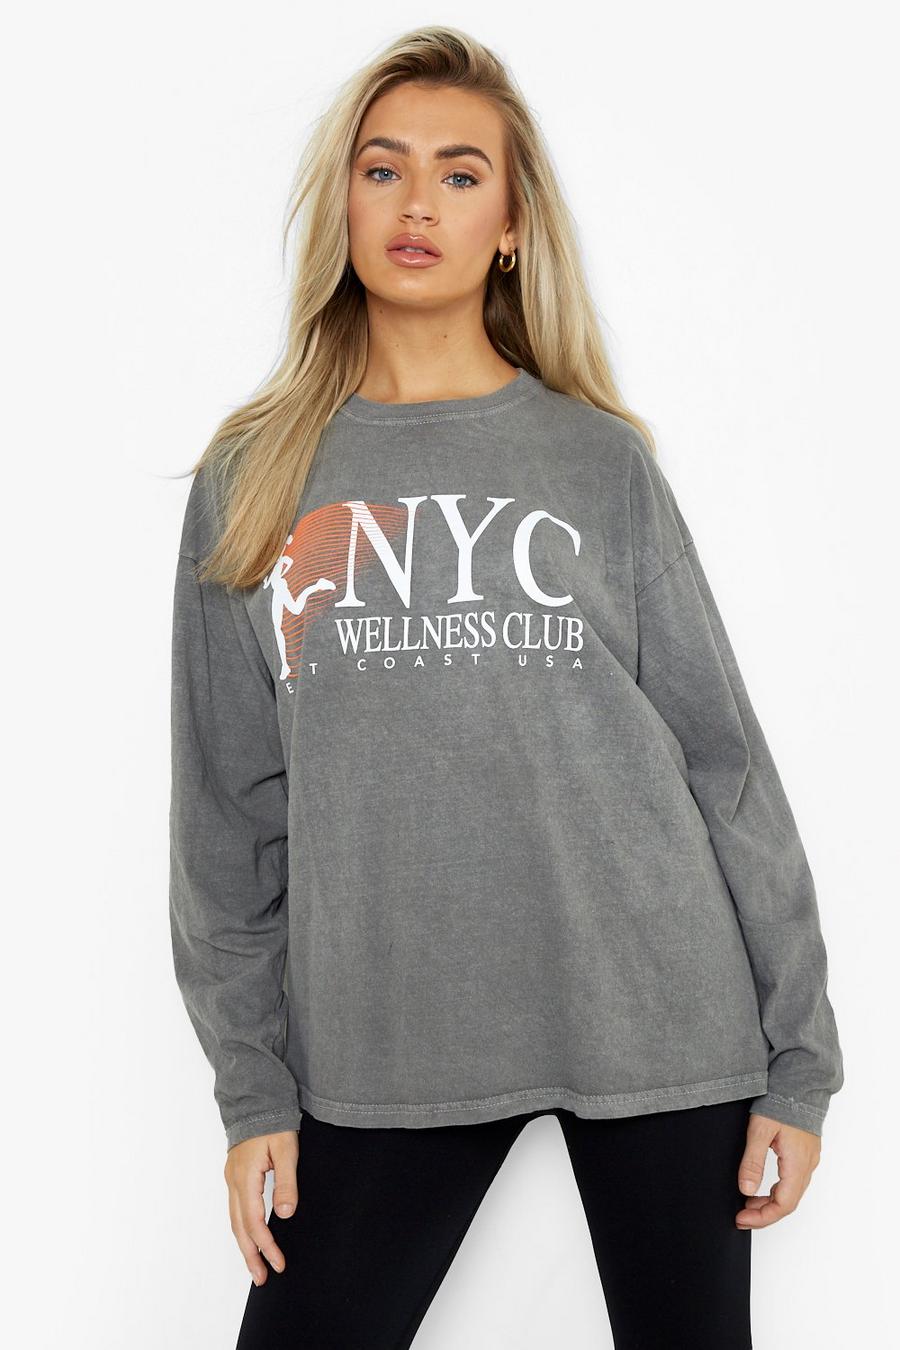 Camiseta oversize de manga larga con estampado de Wellness Club, Charcoal gris